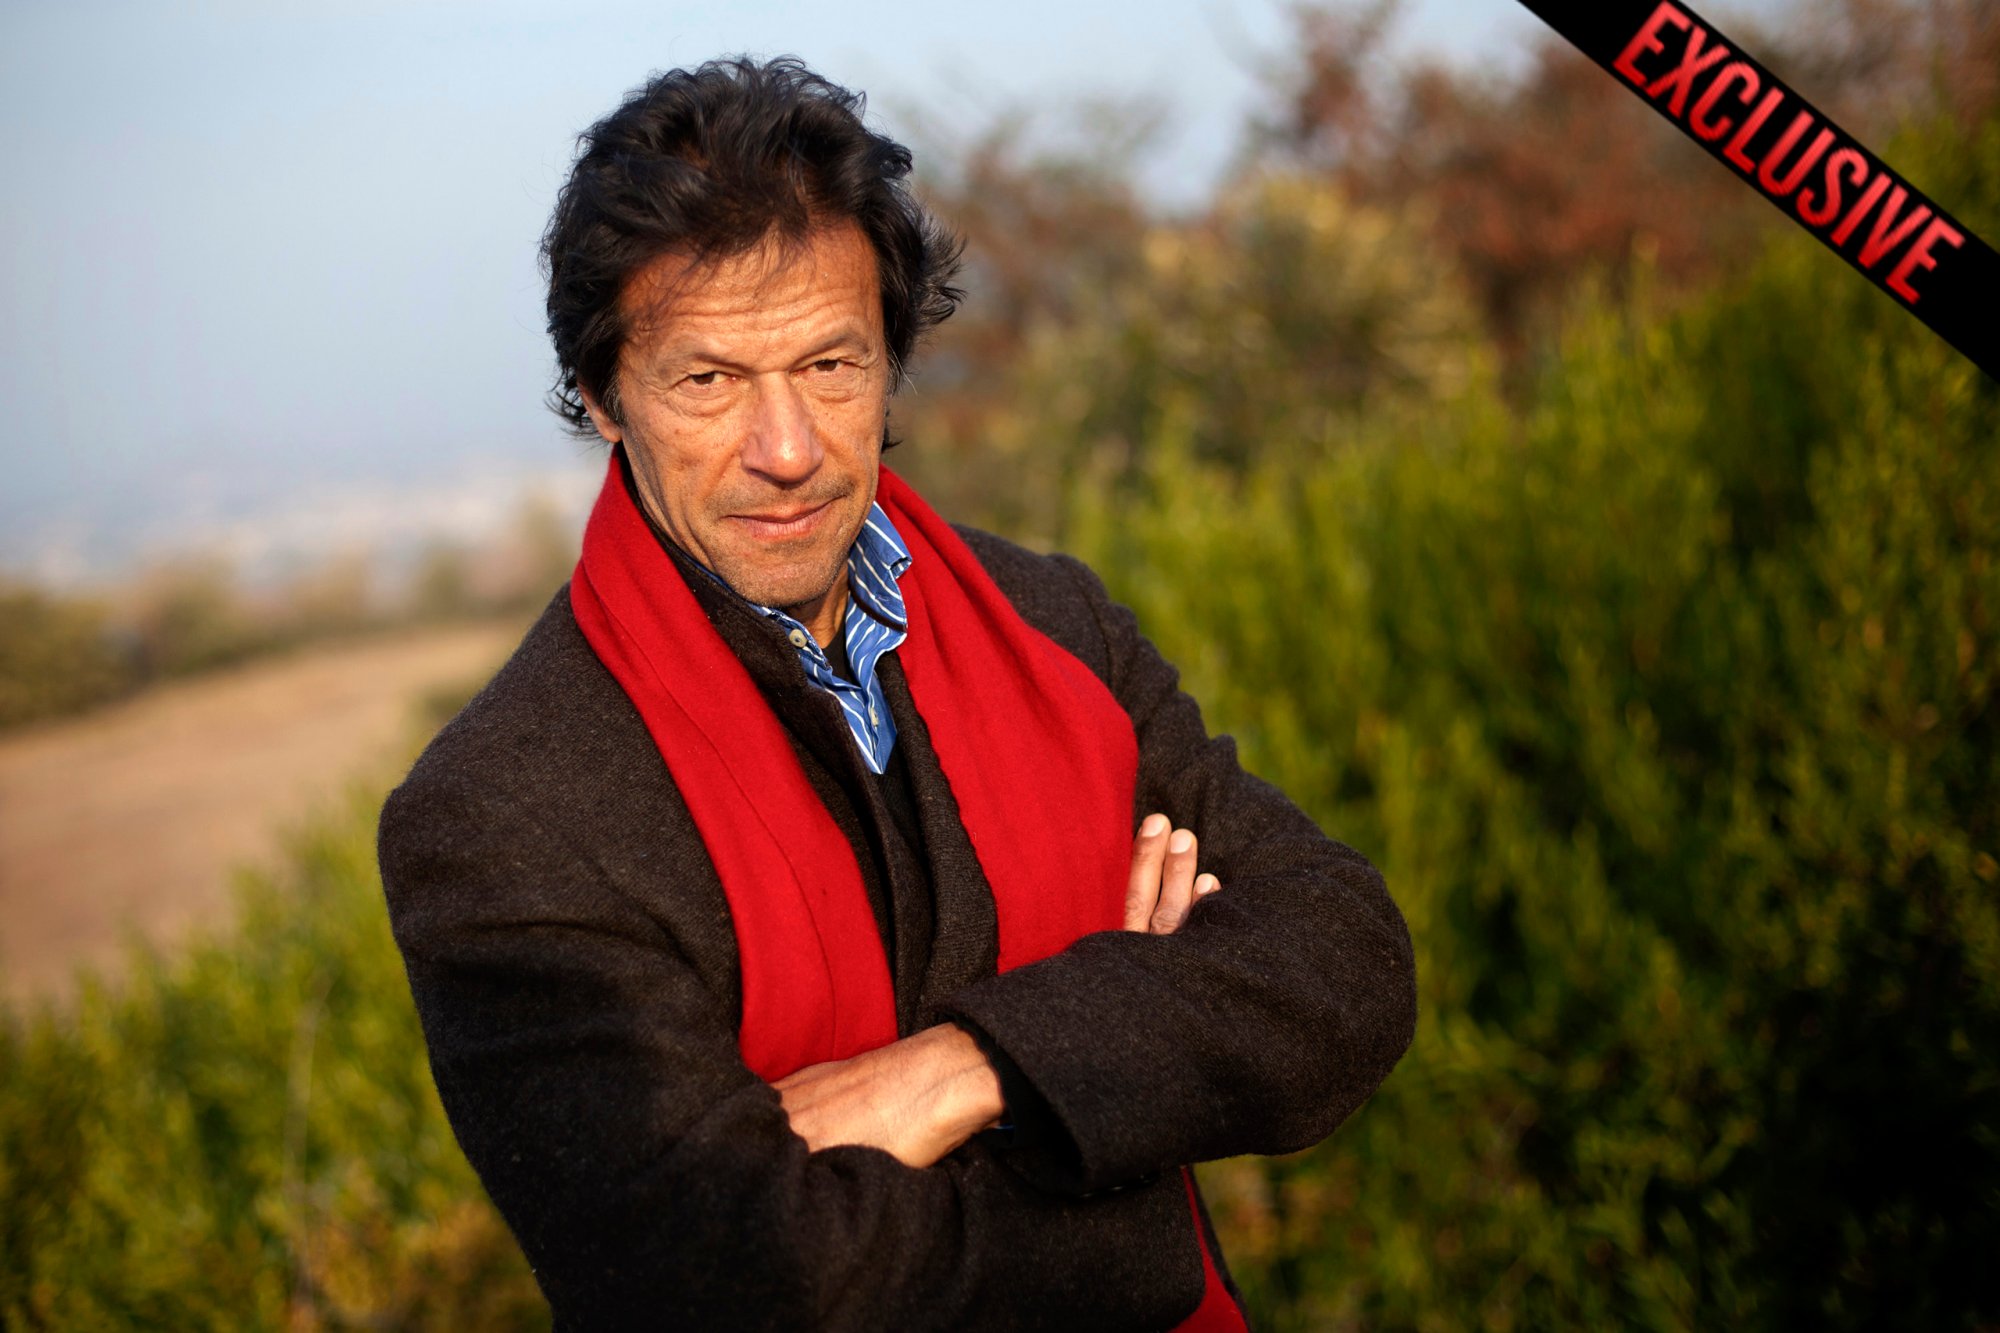 Download Wallpaper Imran Khan Pti - Imran Khan Full Hd , HD Wallpaper & Backgrounds